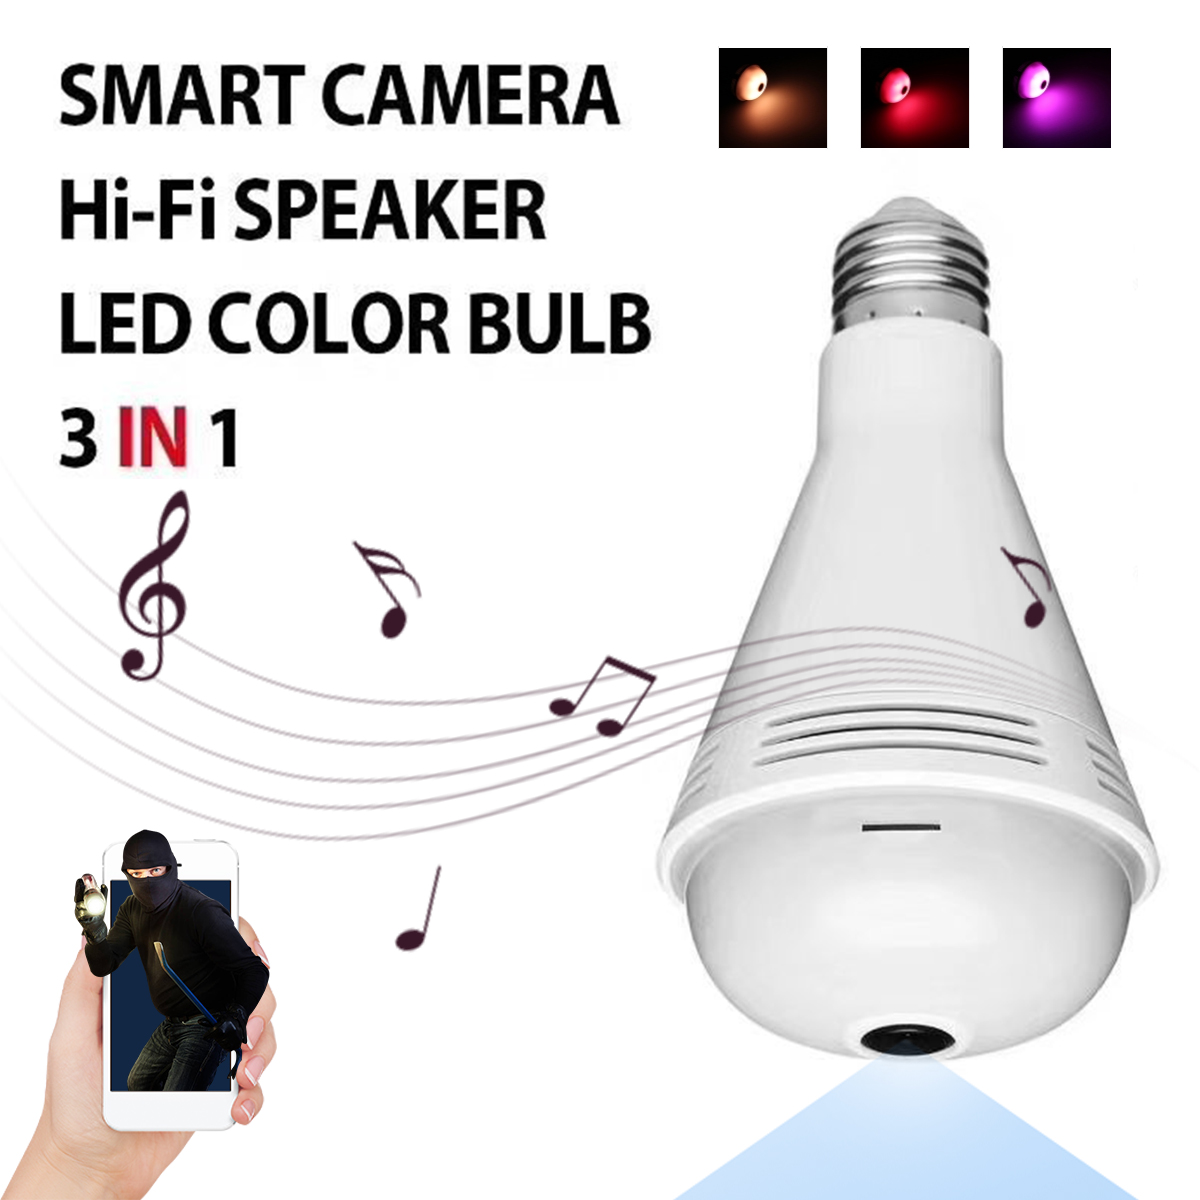 360° HD 960P 1080P WiFi IP Camera LED Light Bulb Bluetooth Speaker Security Monitoring 13